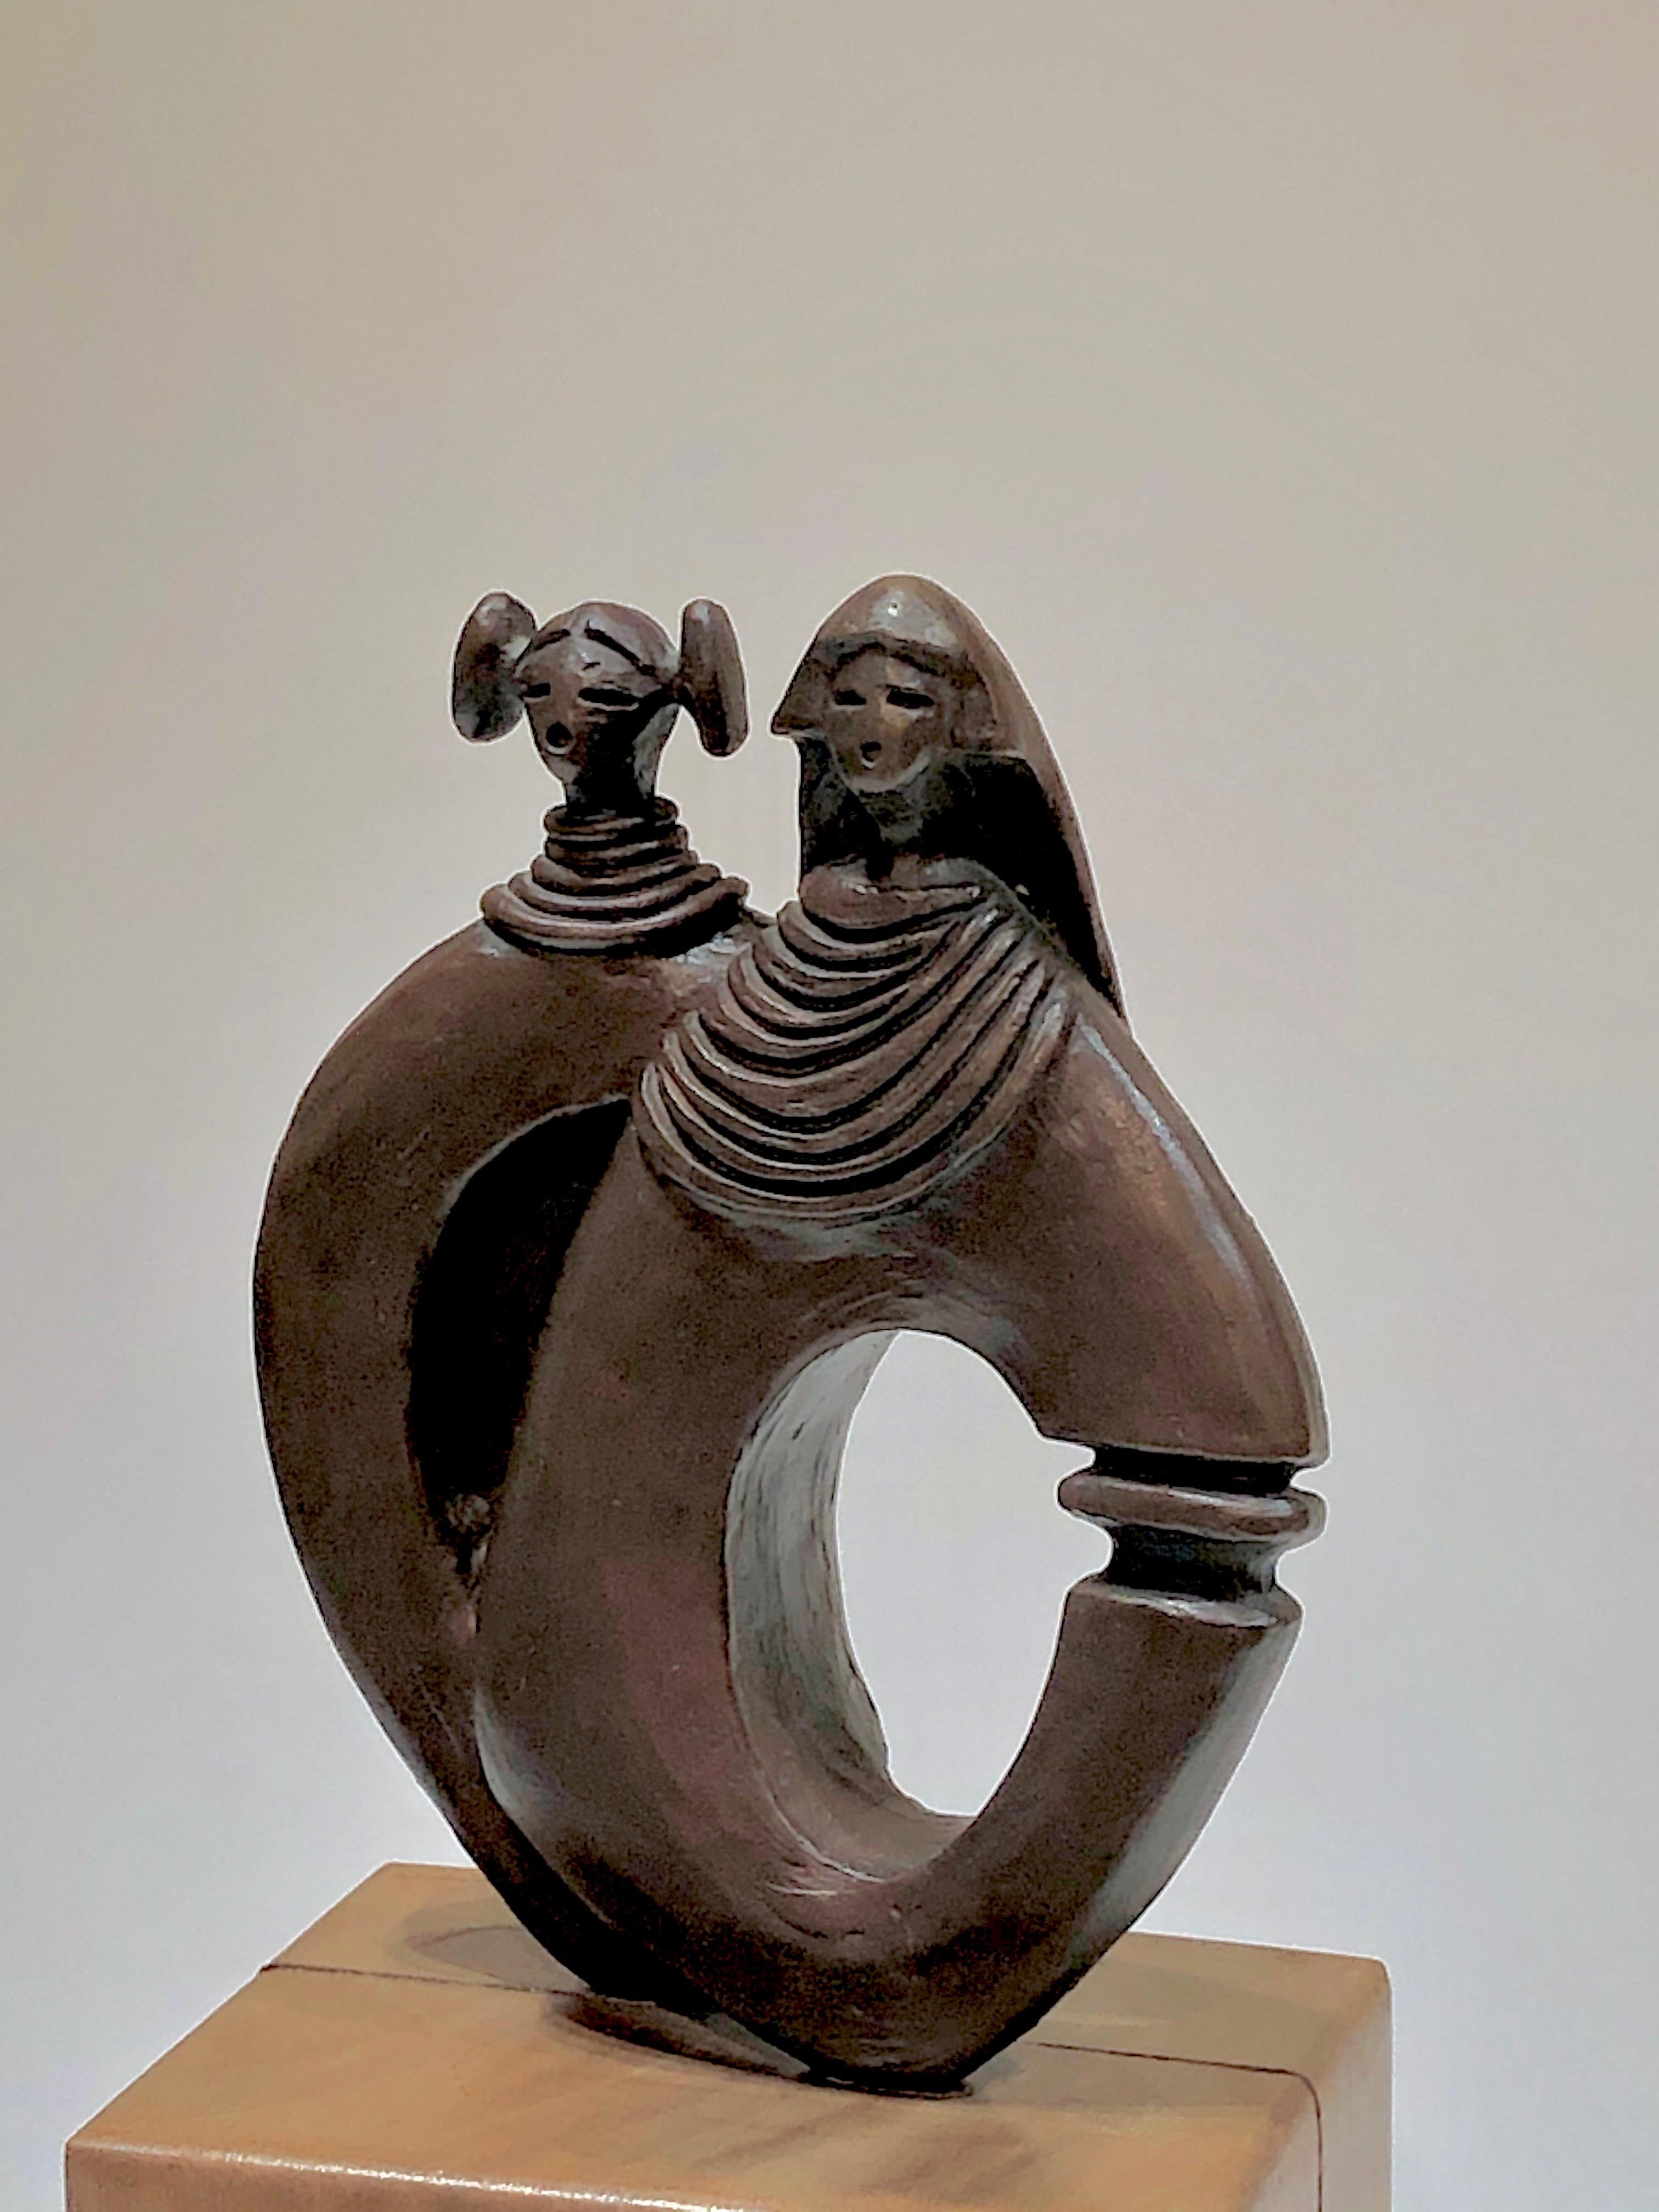 Kachina Man and Woman bronze sculpture by Dan Namingha, Hopi, Kachina, brown

limited edition bronze sculpture
